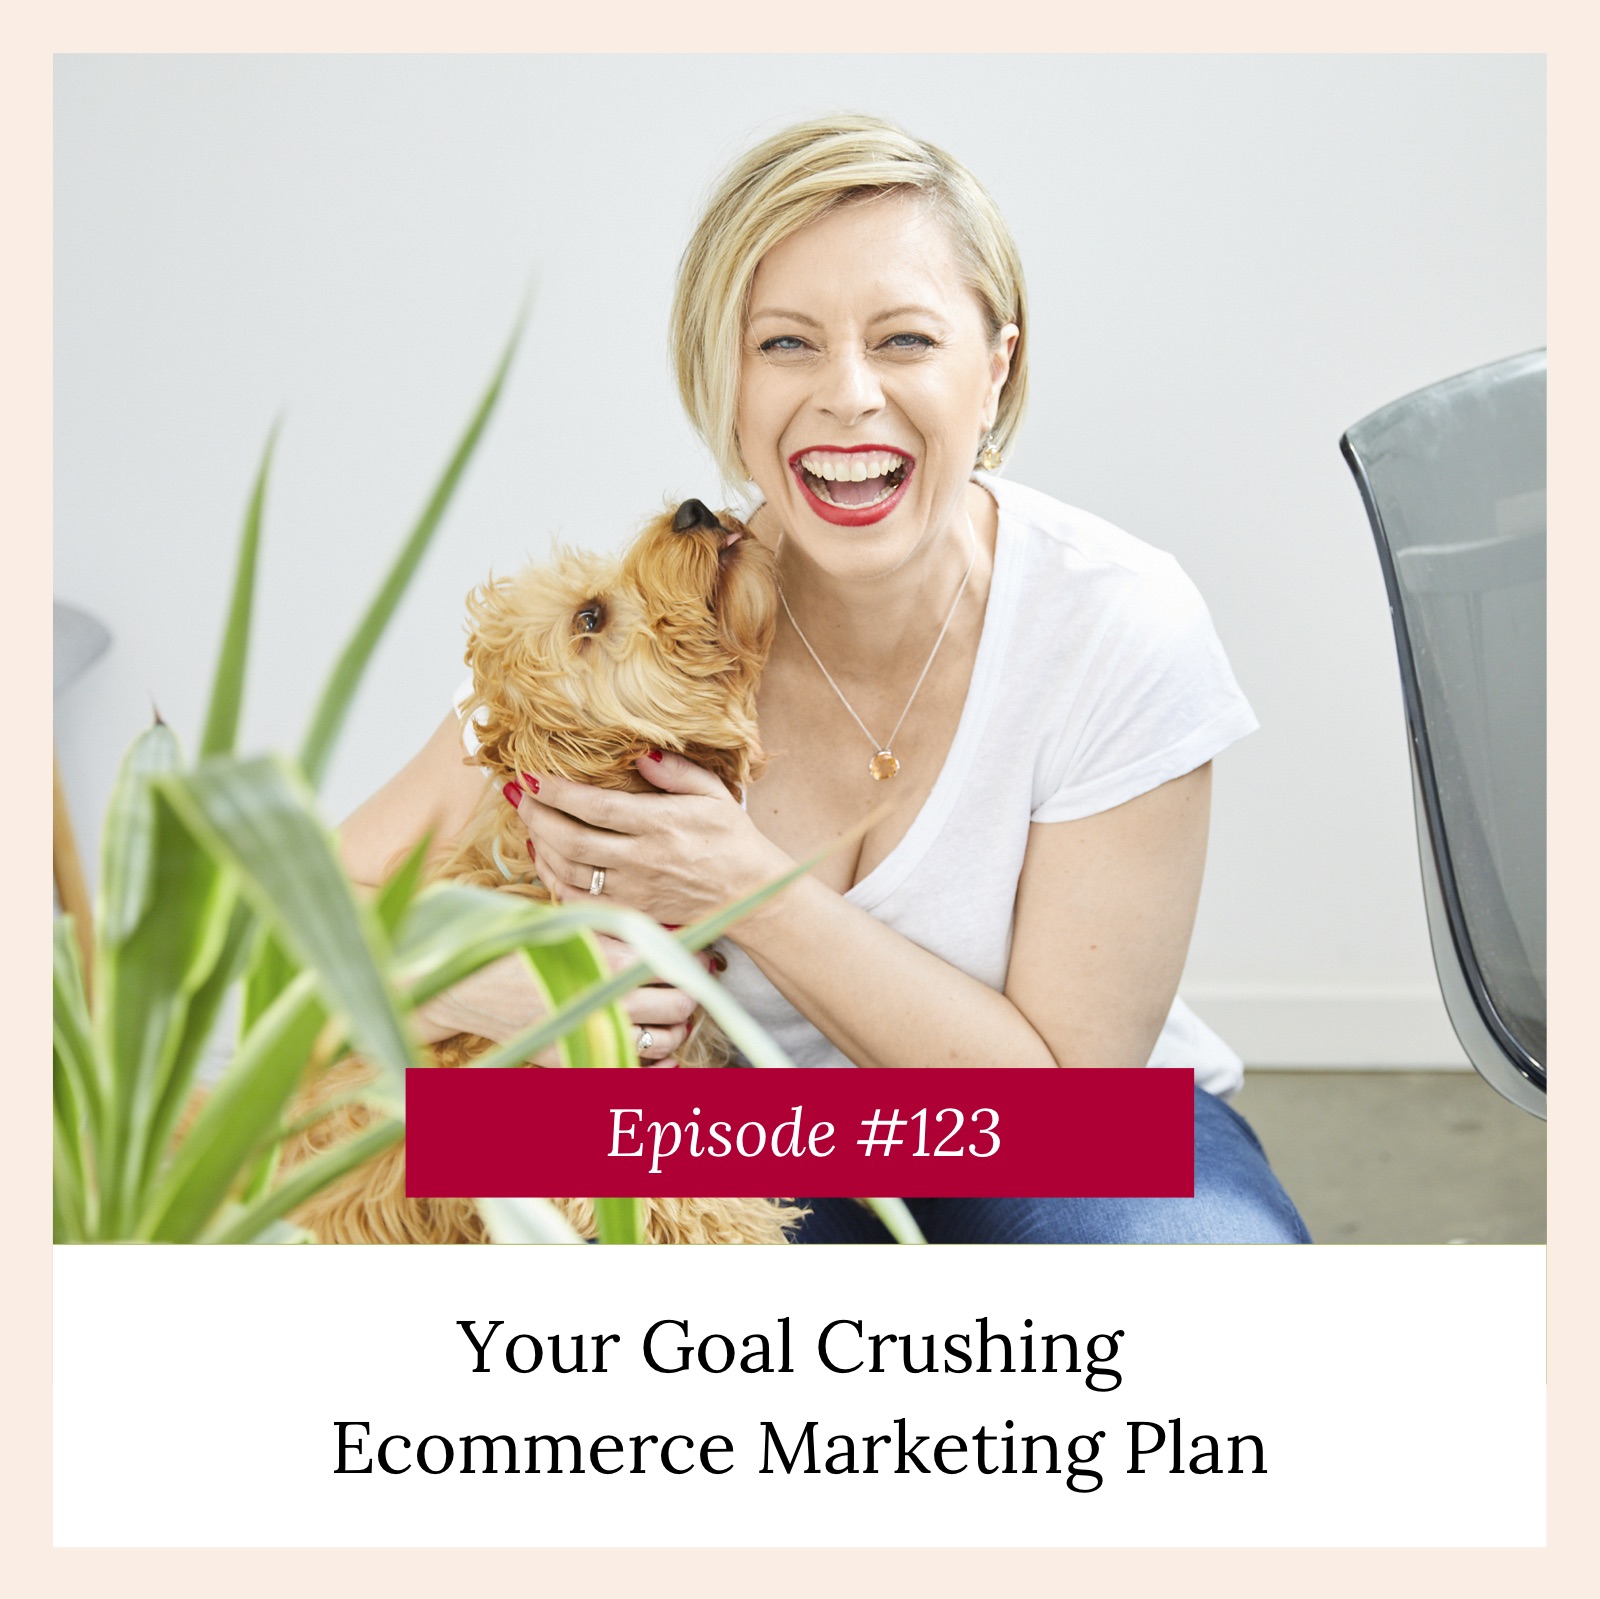 Create a ecommerce marketing plan